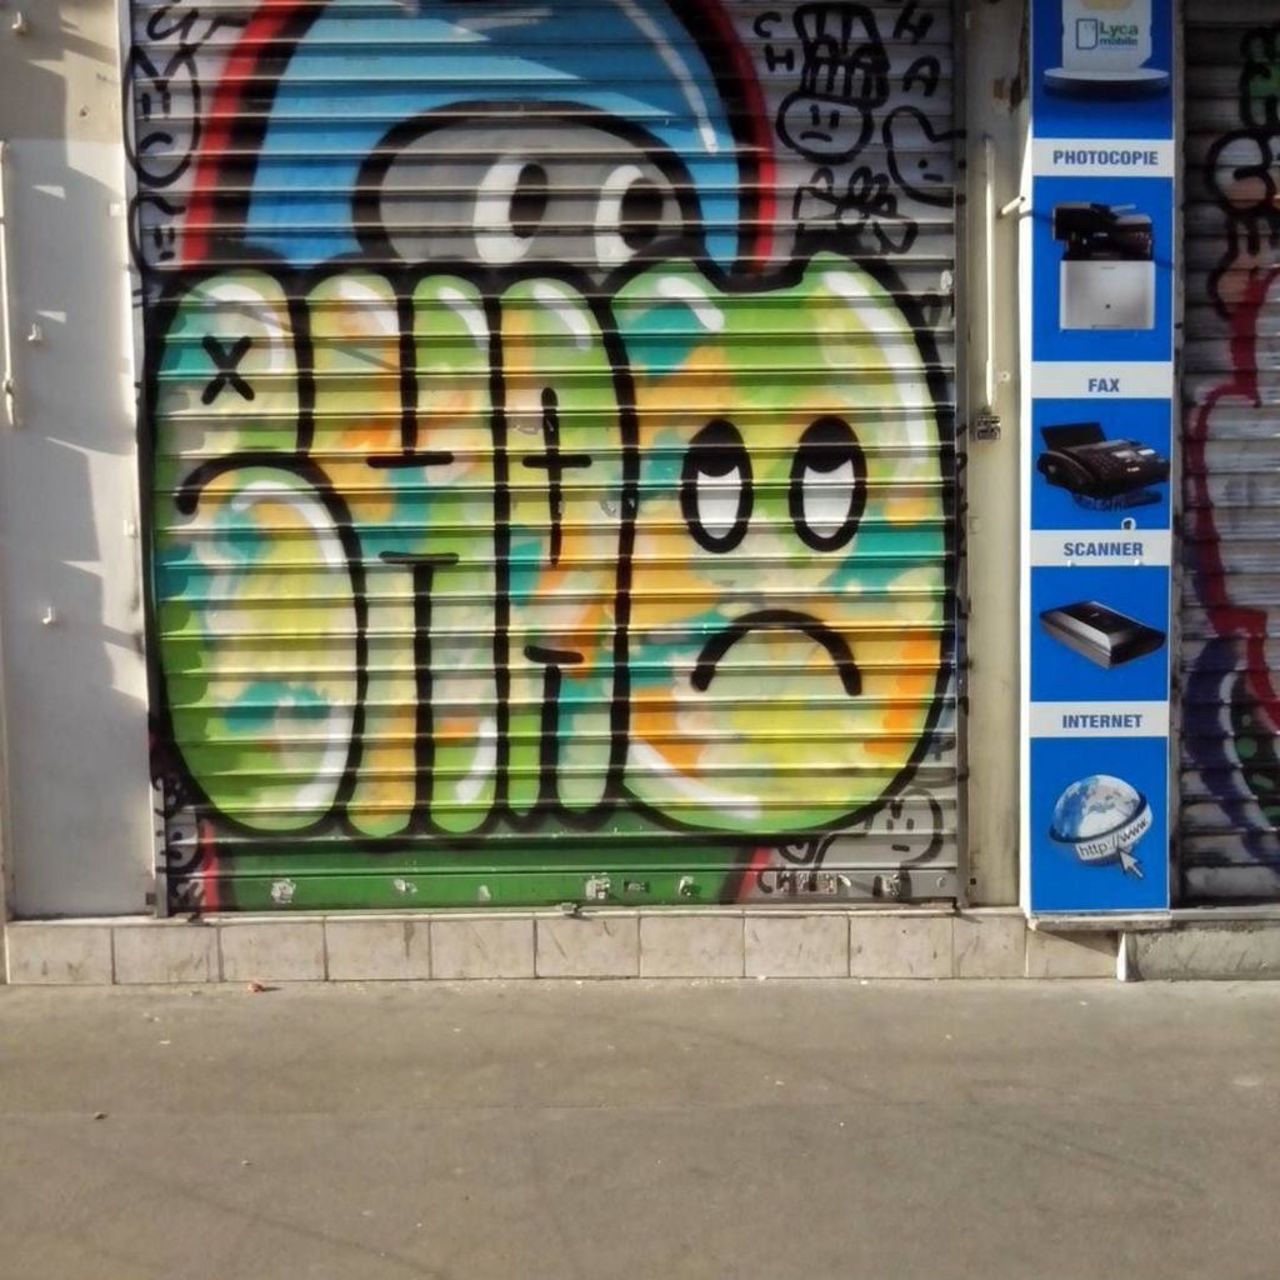 #streetart #streetarteverywhere #streetshot #graffitiart #graffiti #arturbain #urbanart  #rideaudefer #stencil #spr… https://t.co/Aon022oSs8